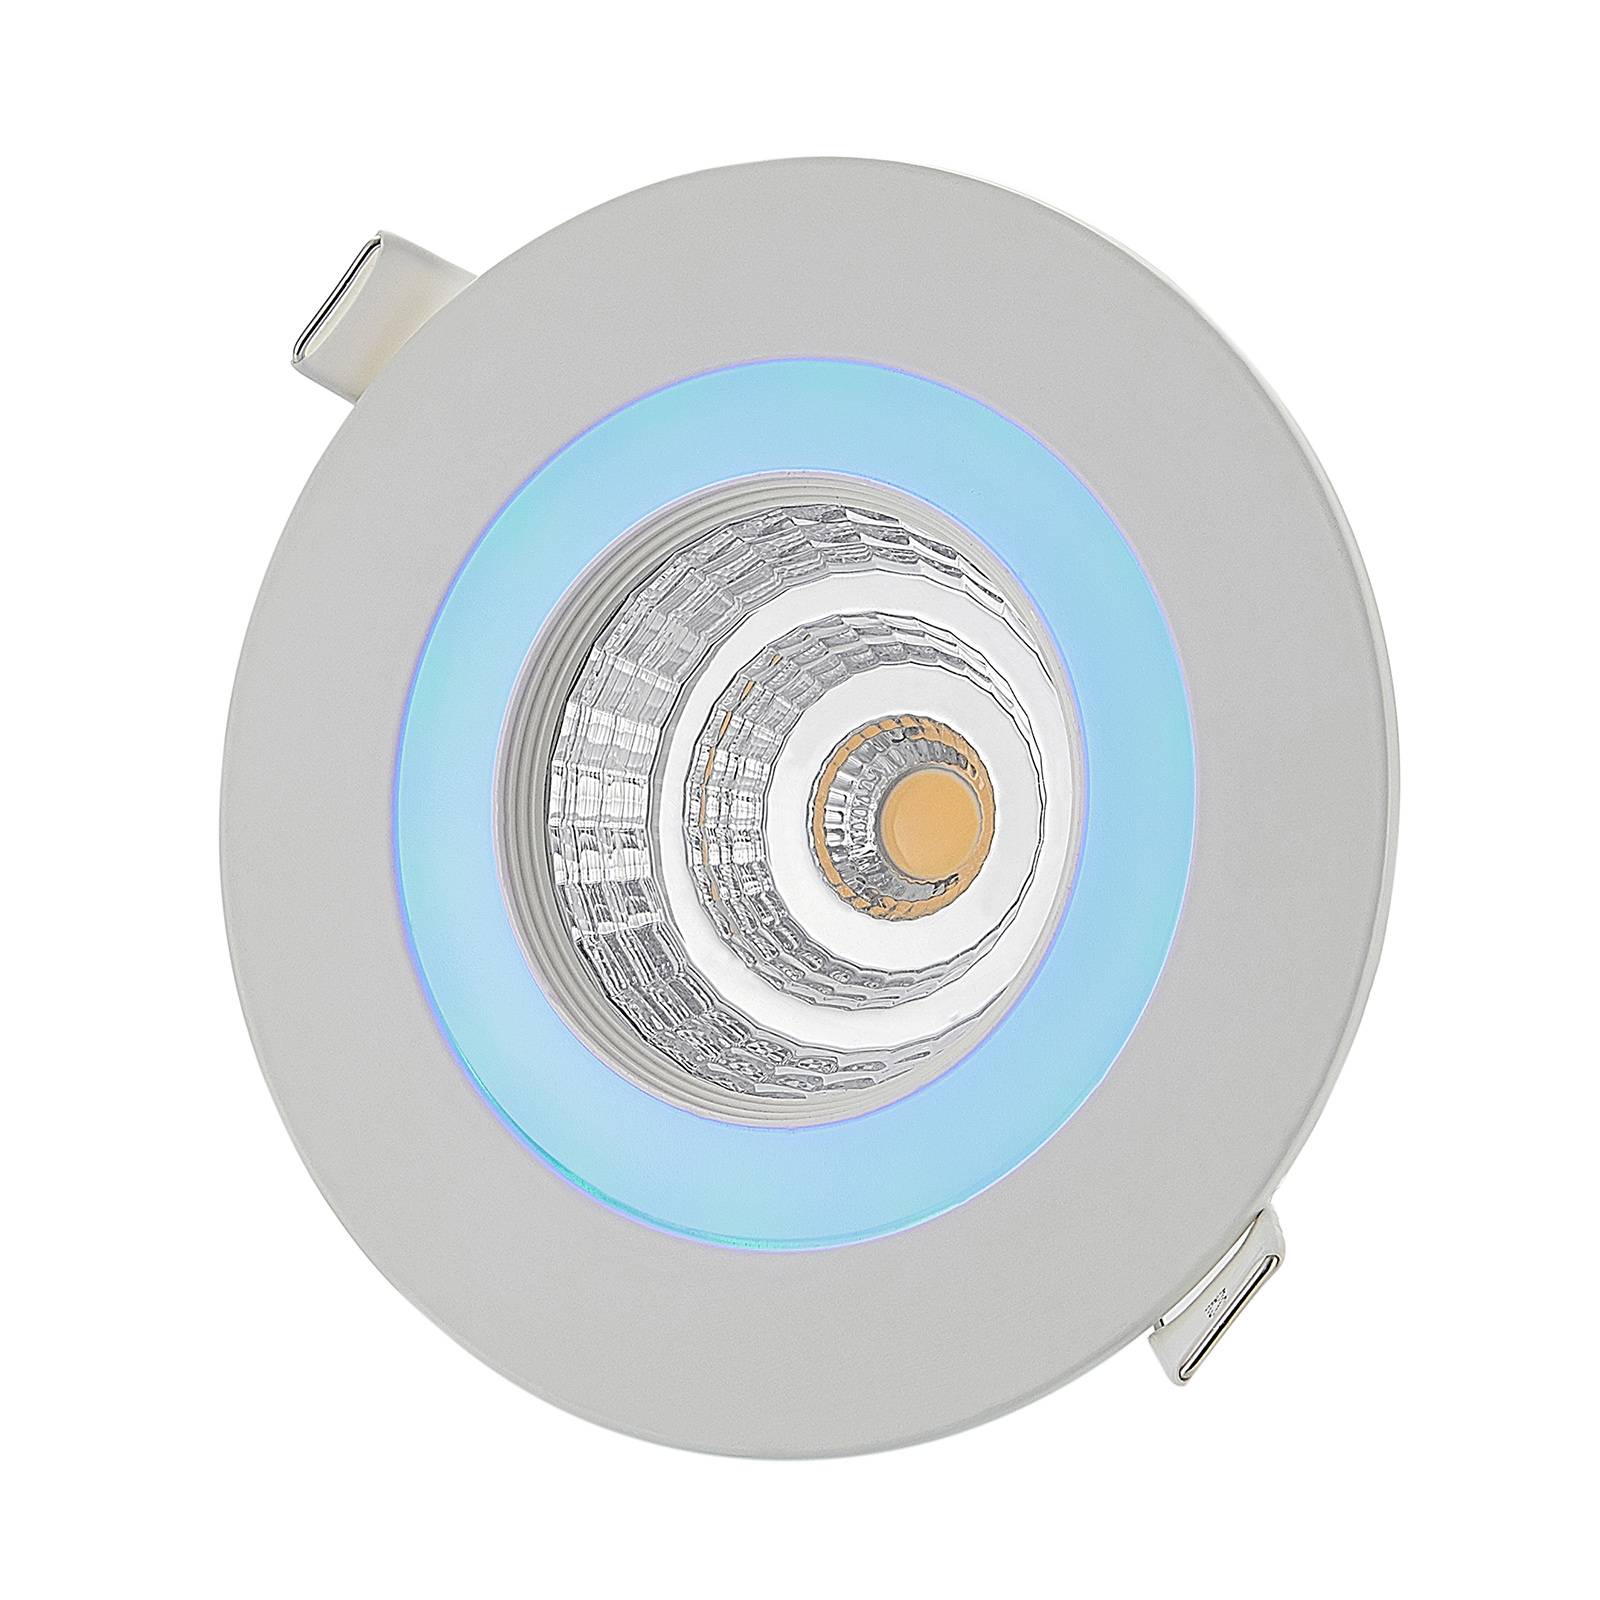 Lindby Noor LED-Einbaustrahler RGBW, weiß